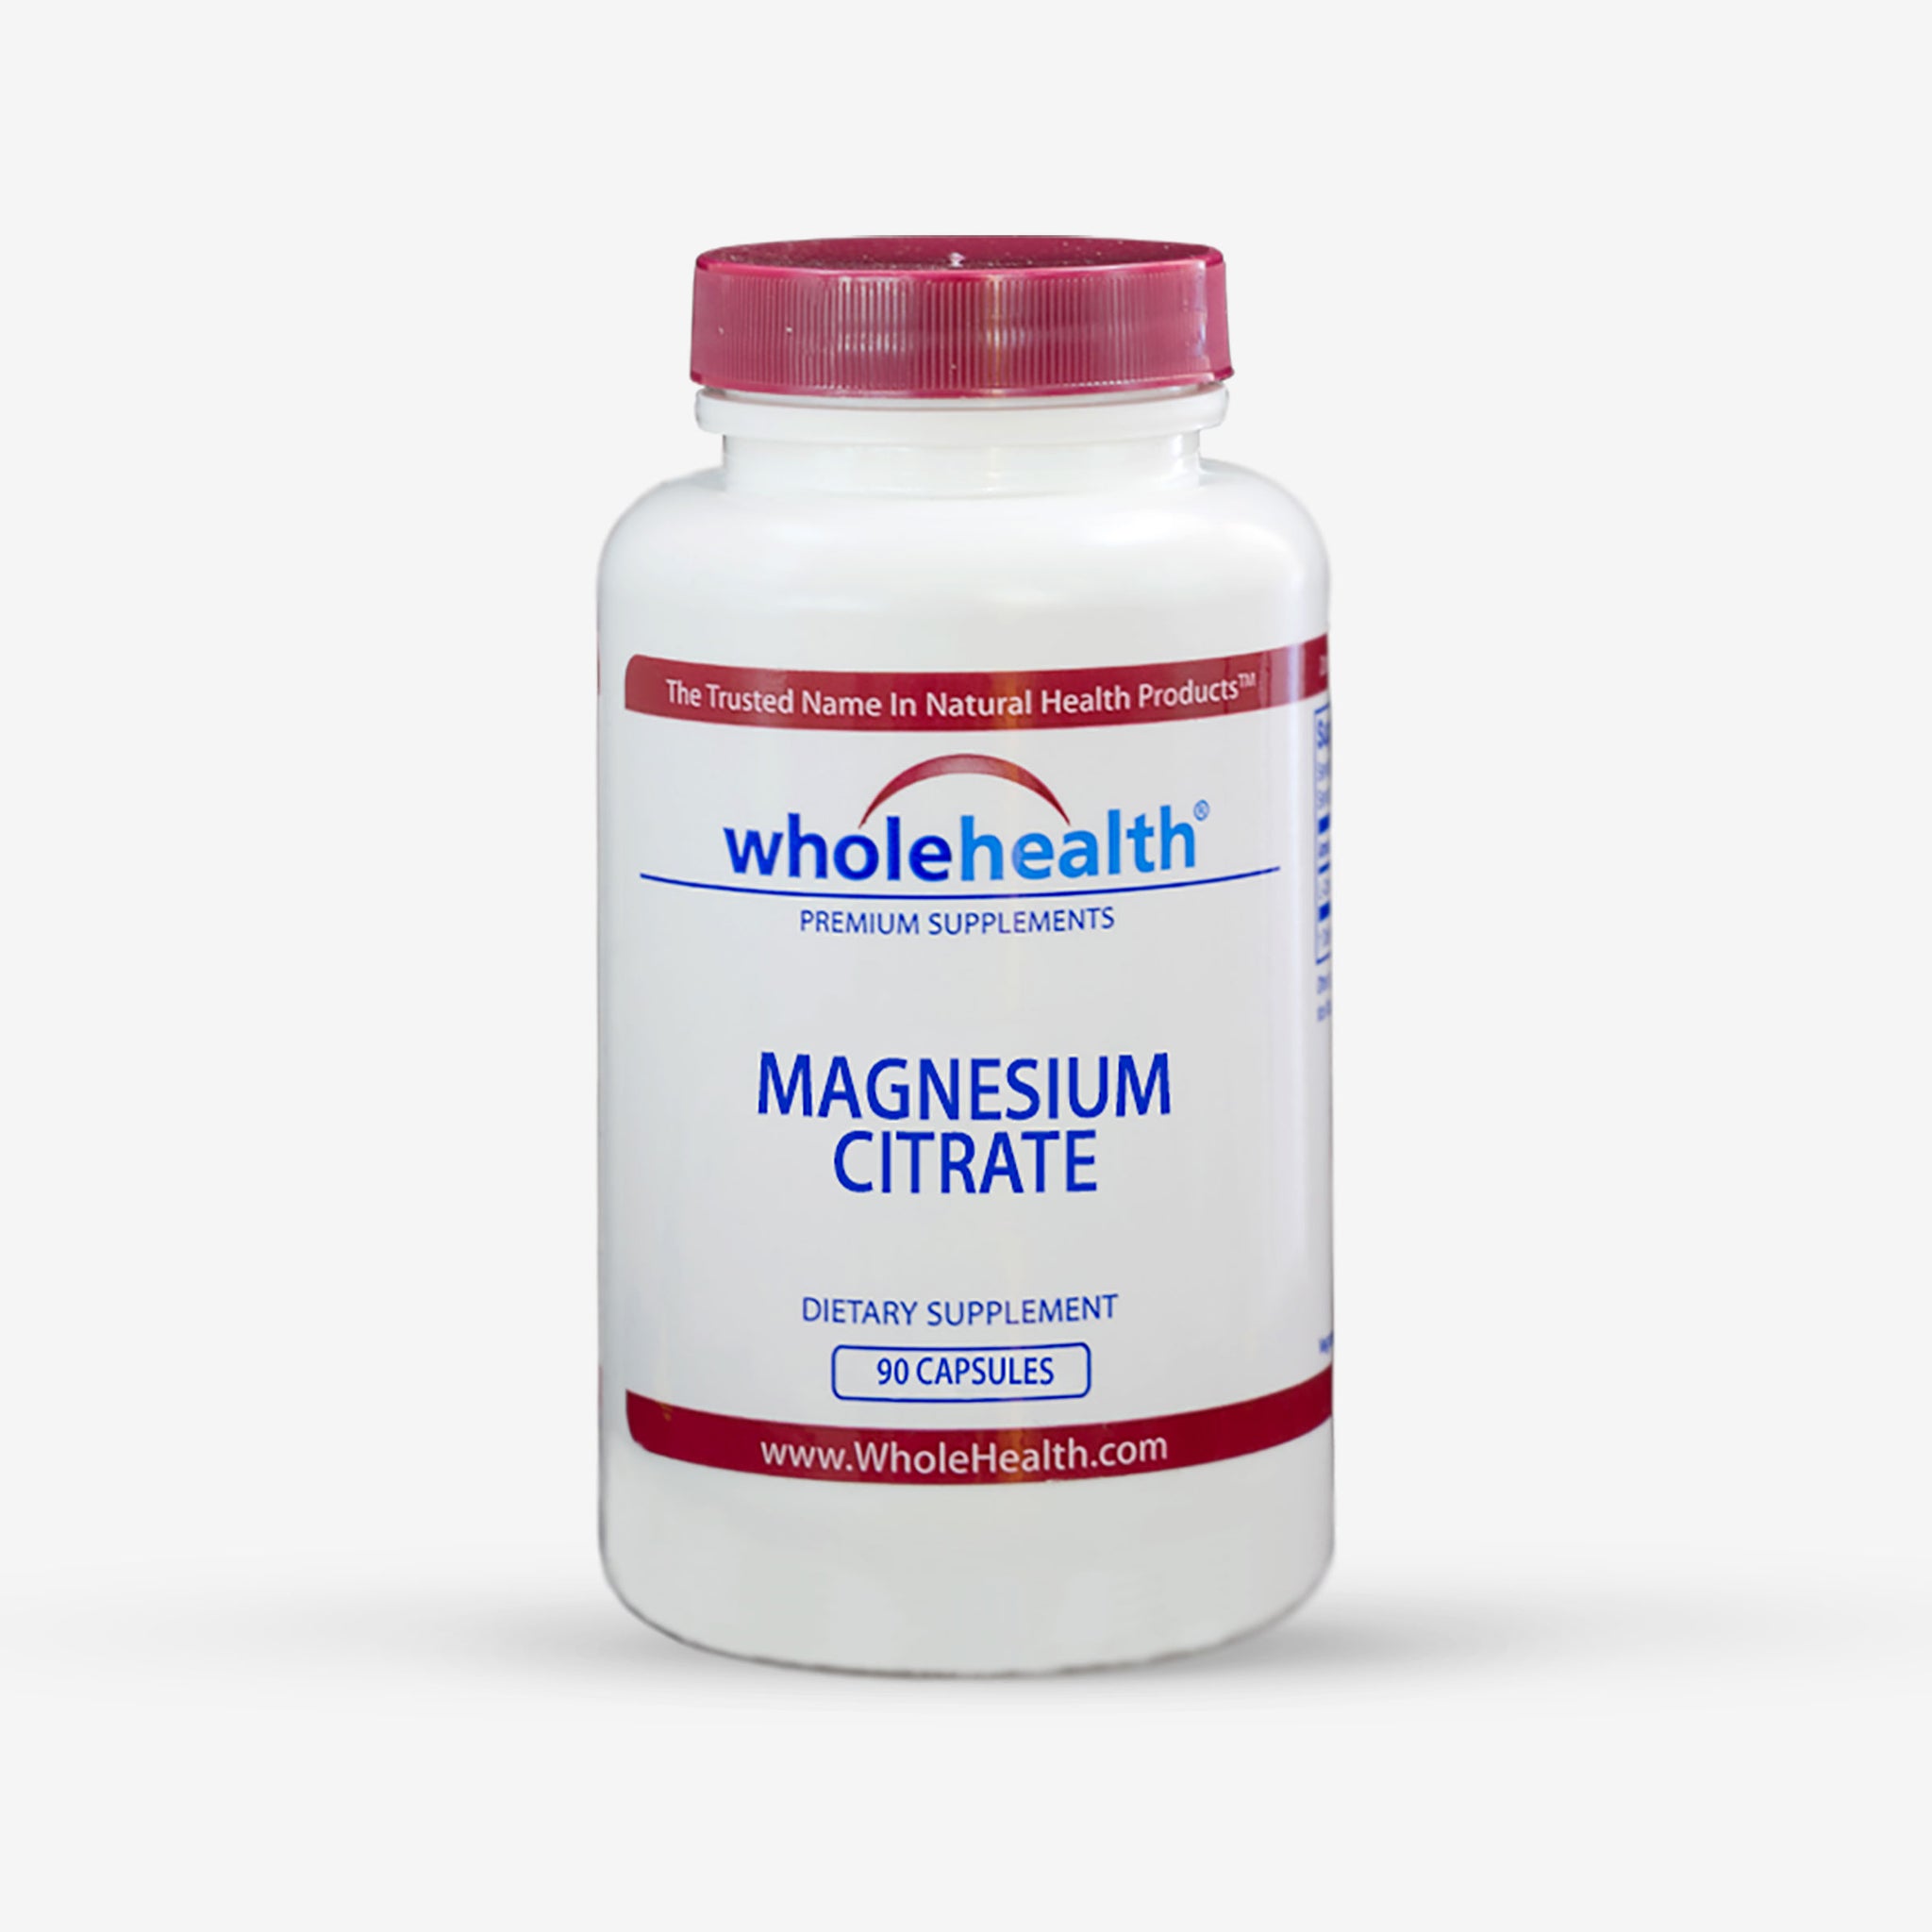 wholehealth Magnesium Citrate v1a